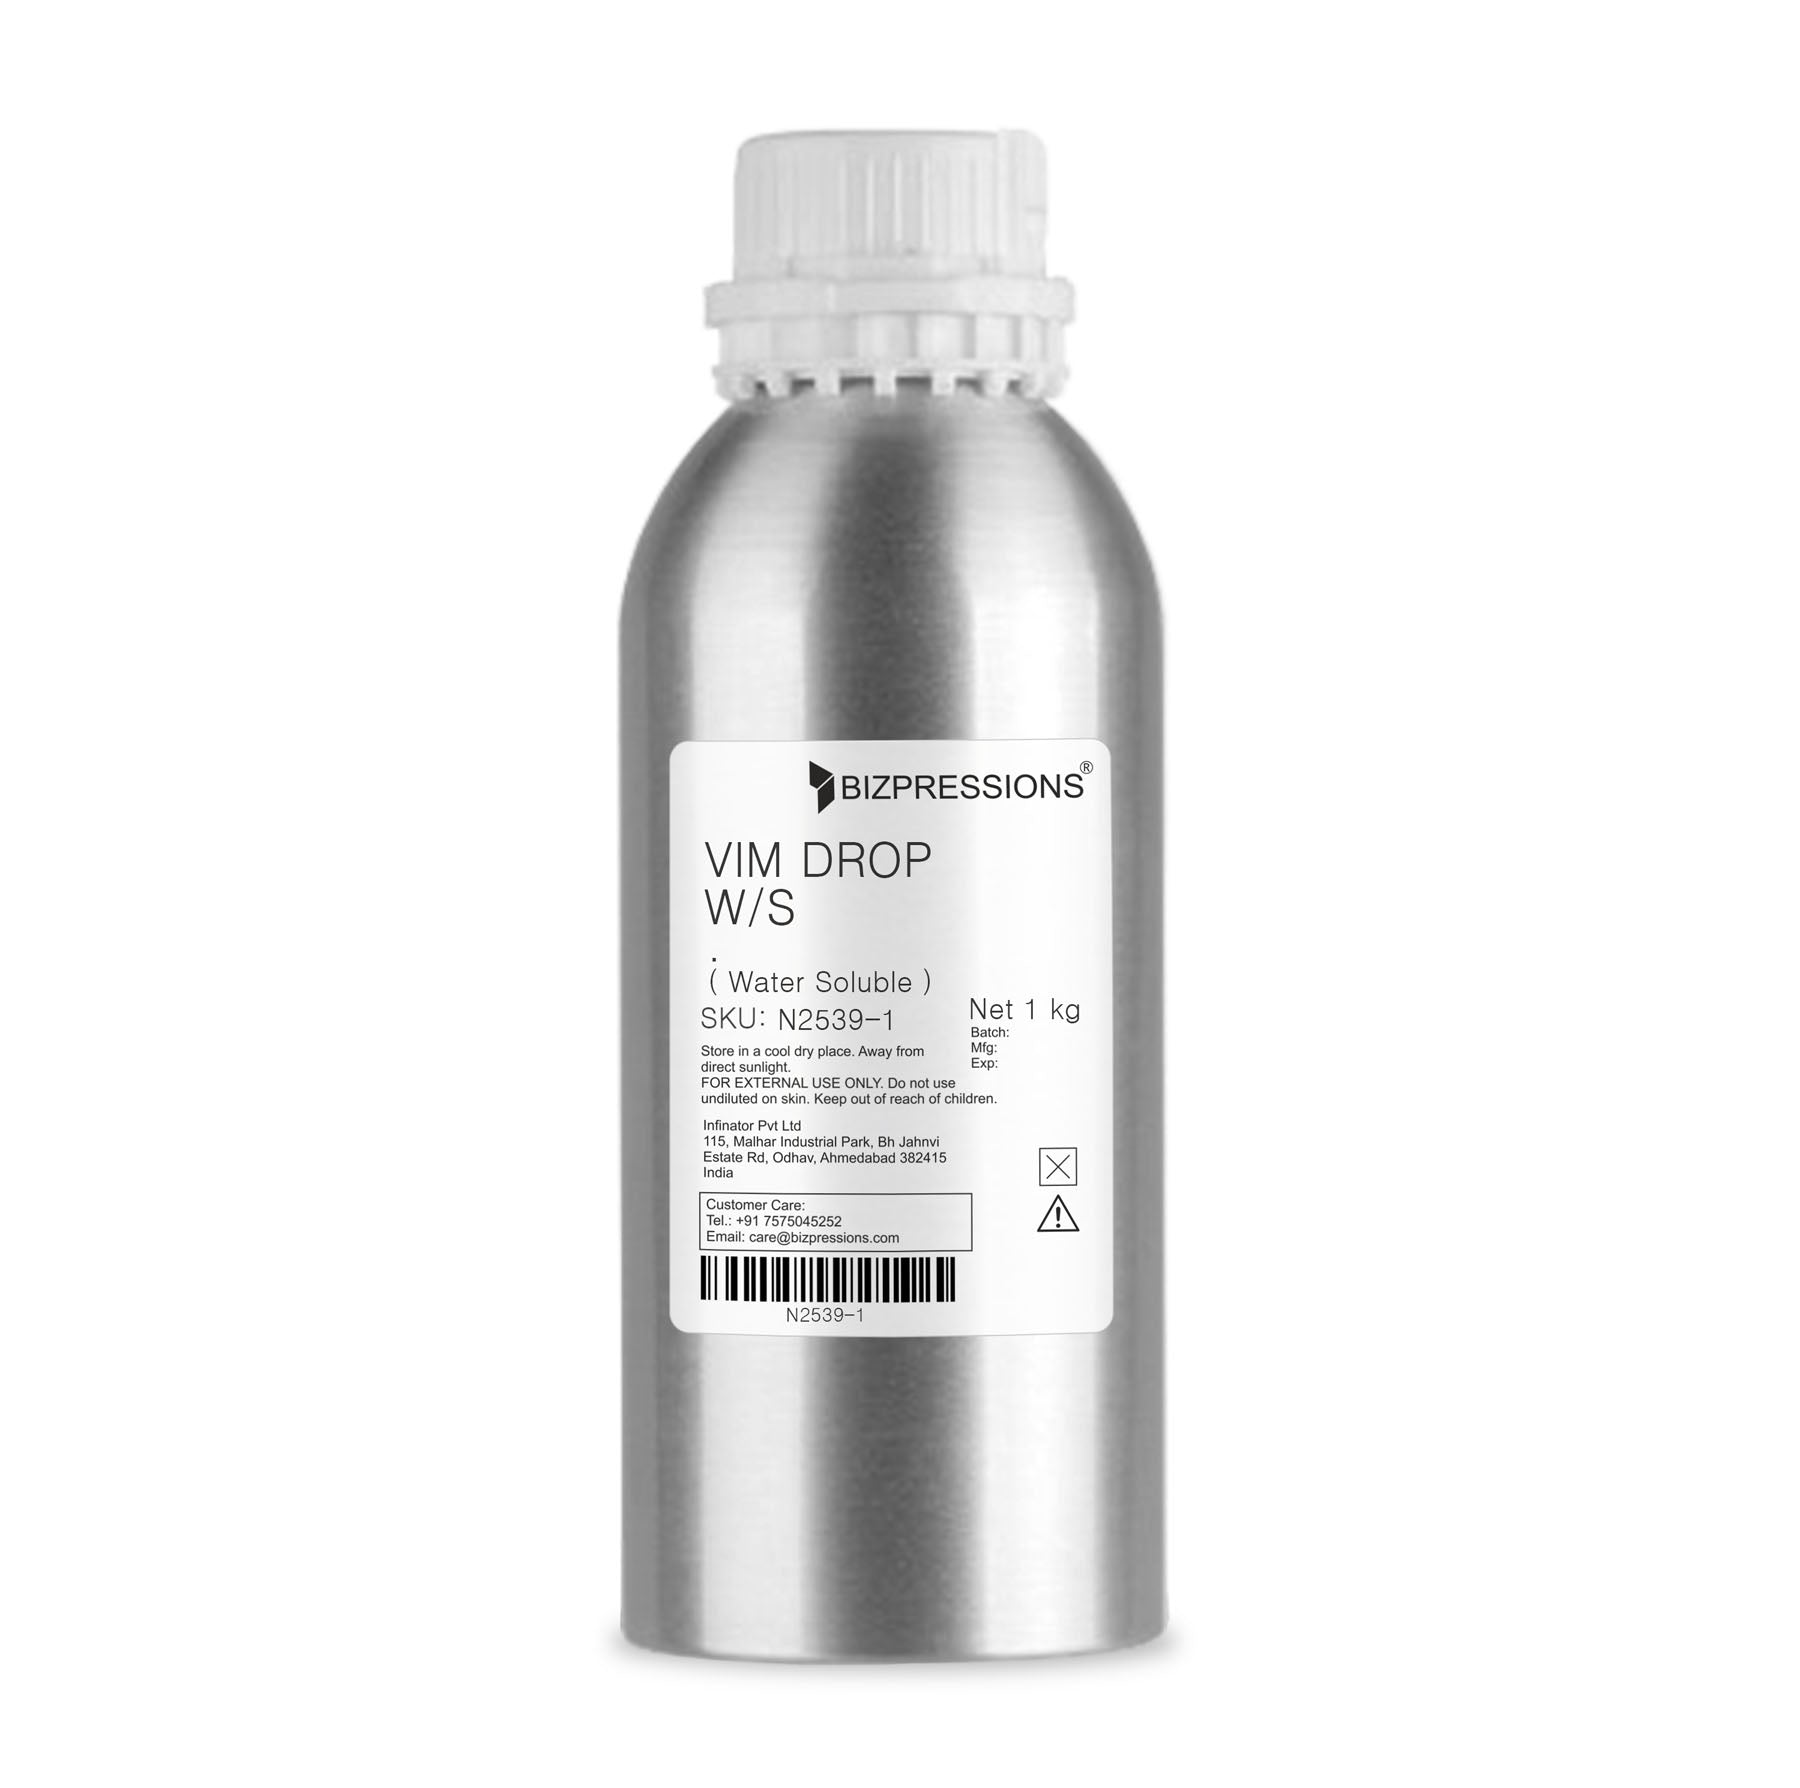 VIM DROP W/S. - Fragrance ( Water Soluble ) - 1 kg